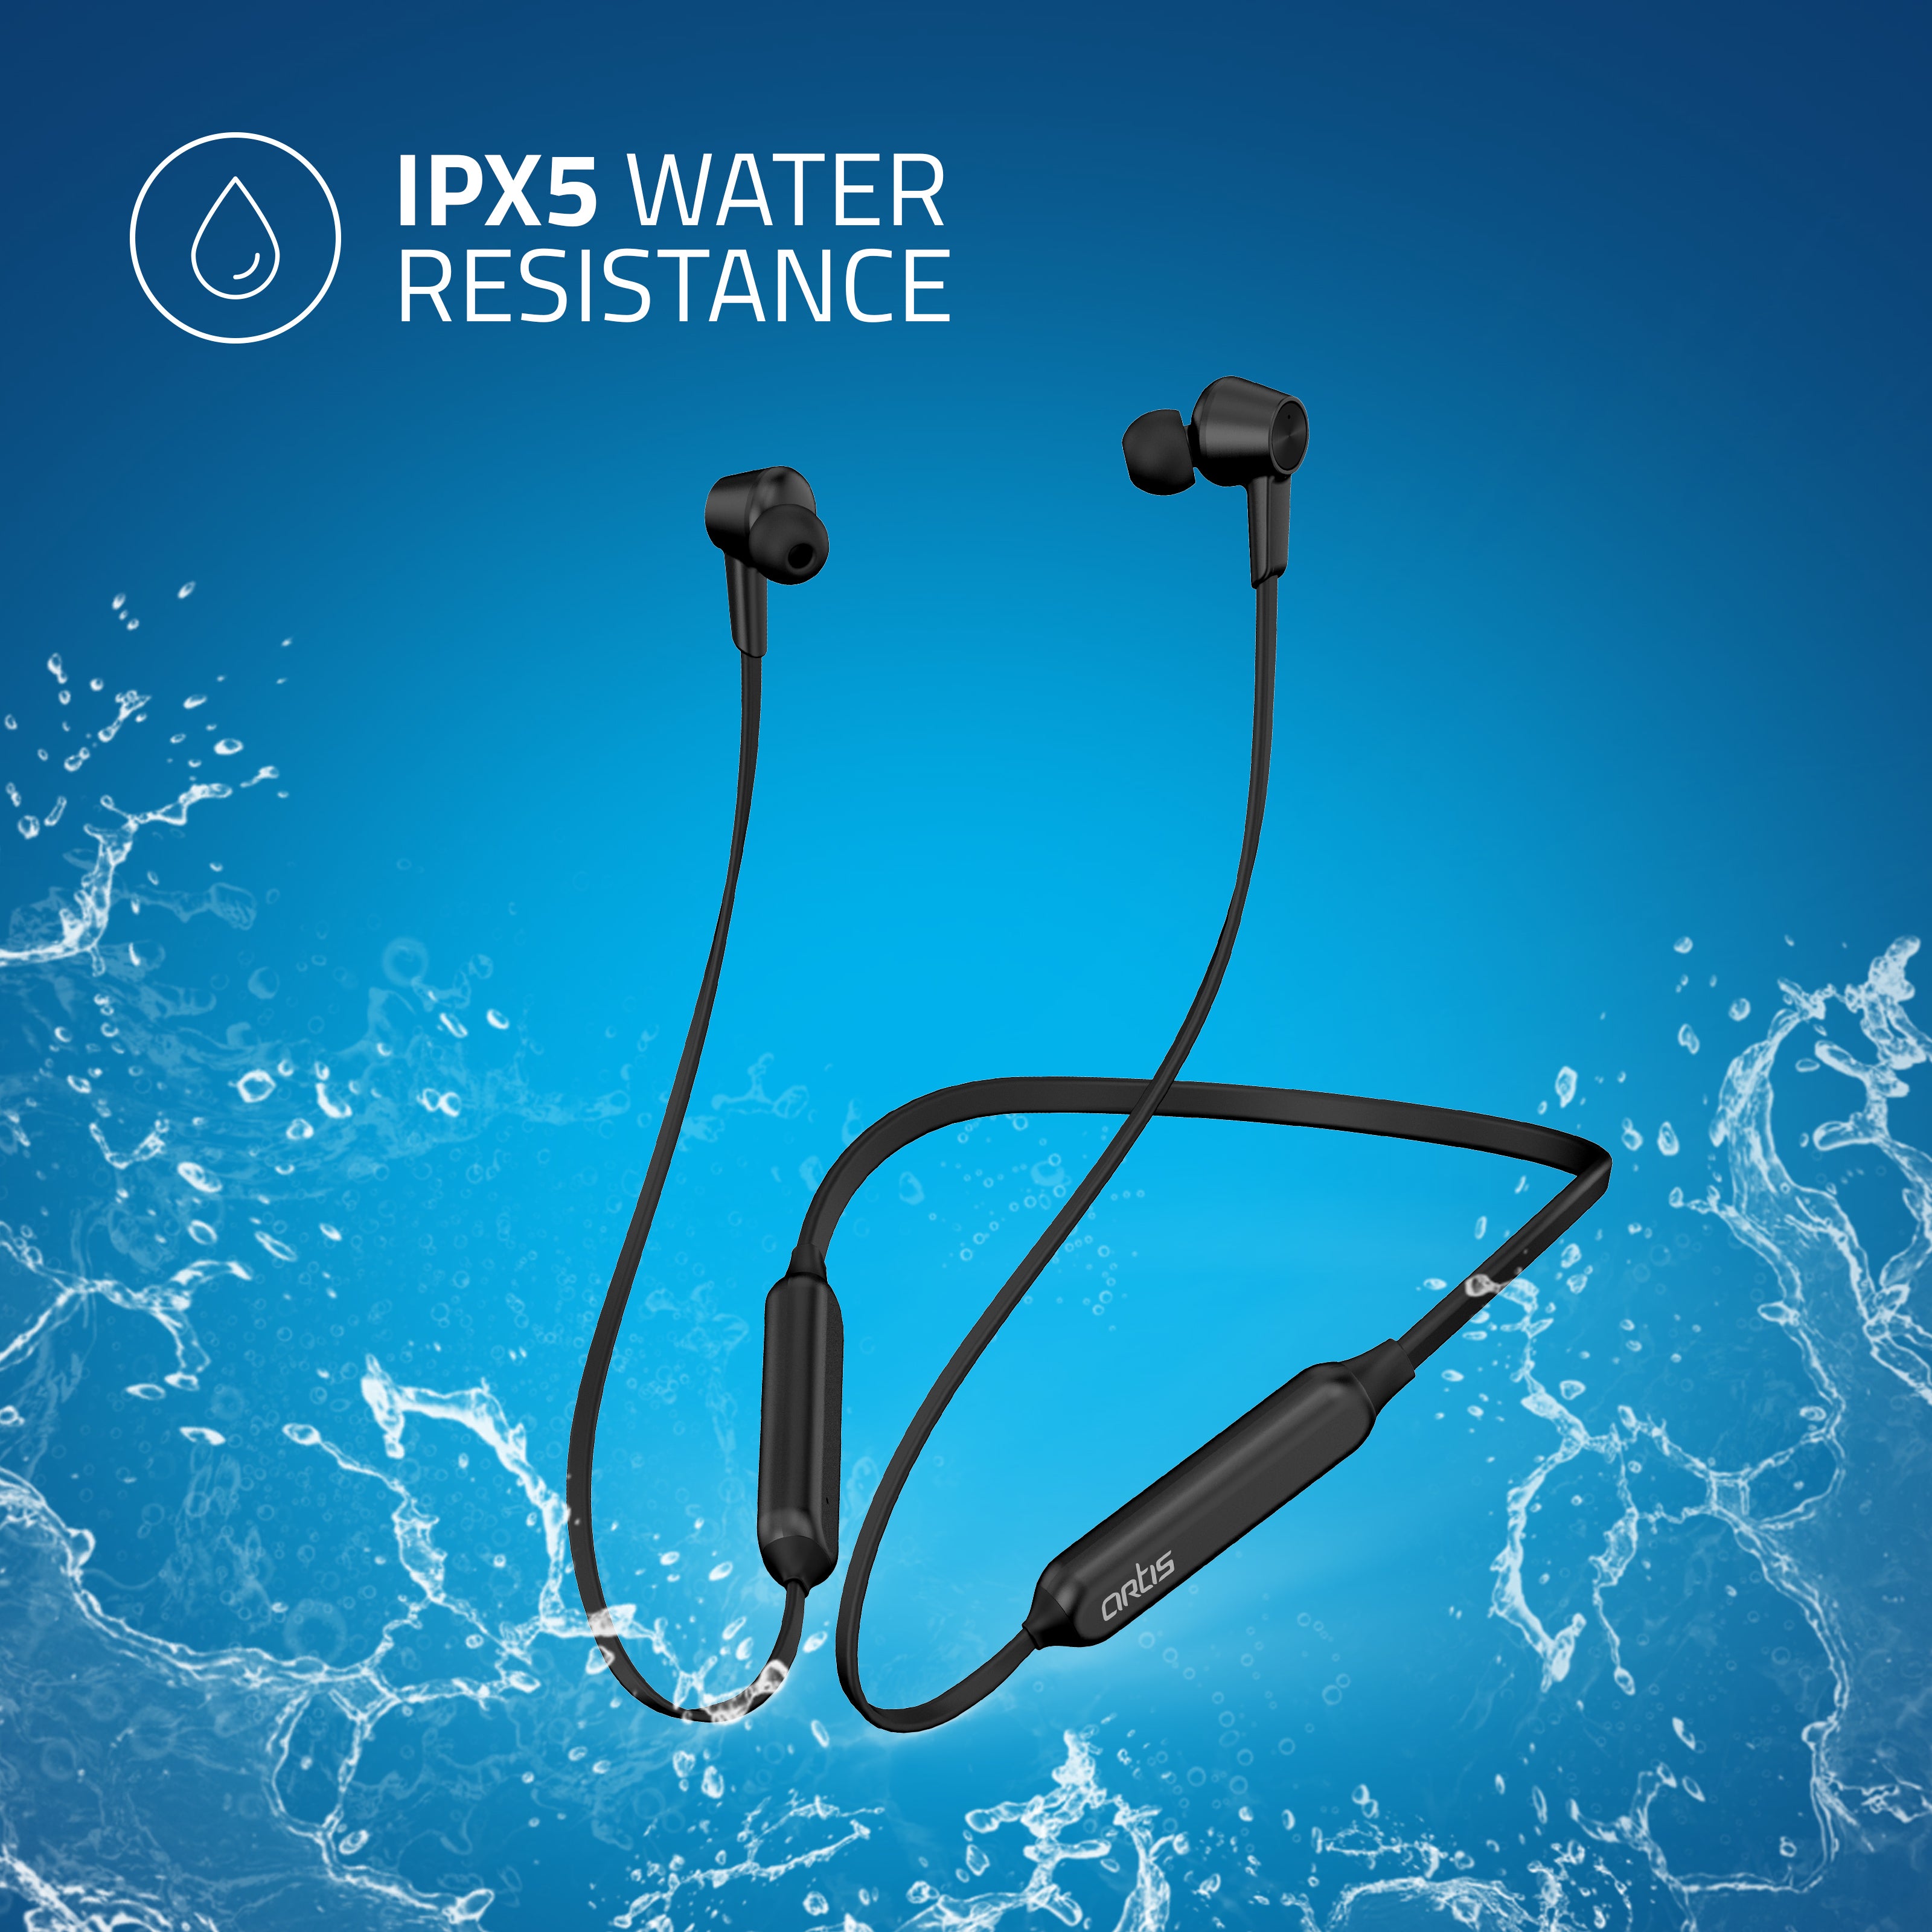 BE990M Artis Sports Bluetooth Wireless Neckband Earphone is IPx5 Water Resistance